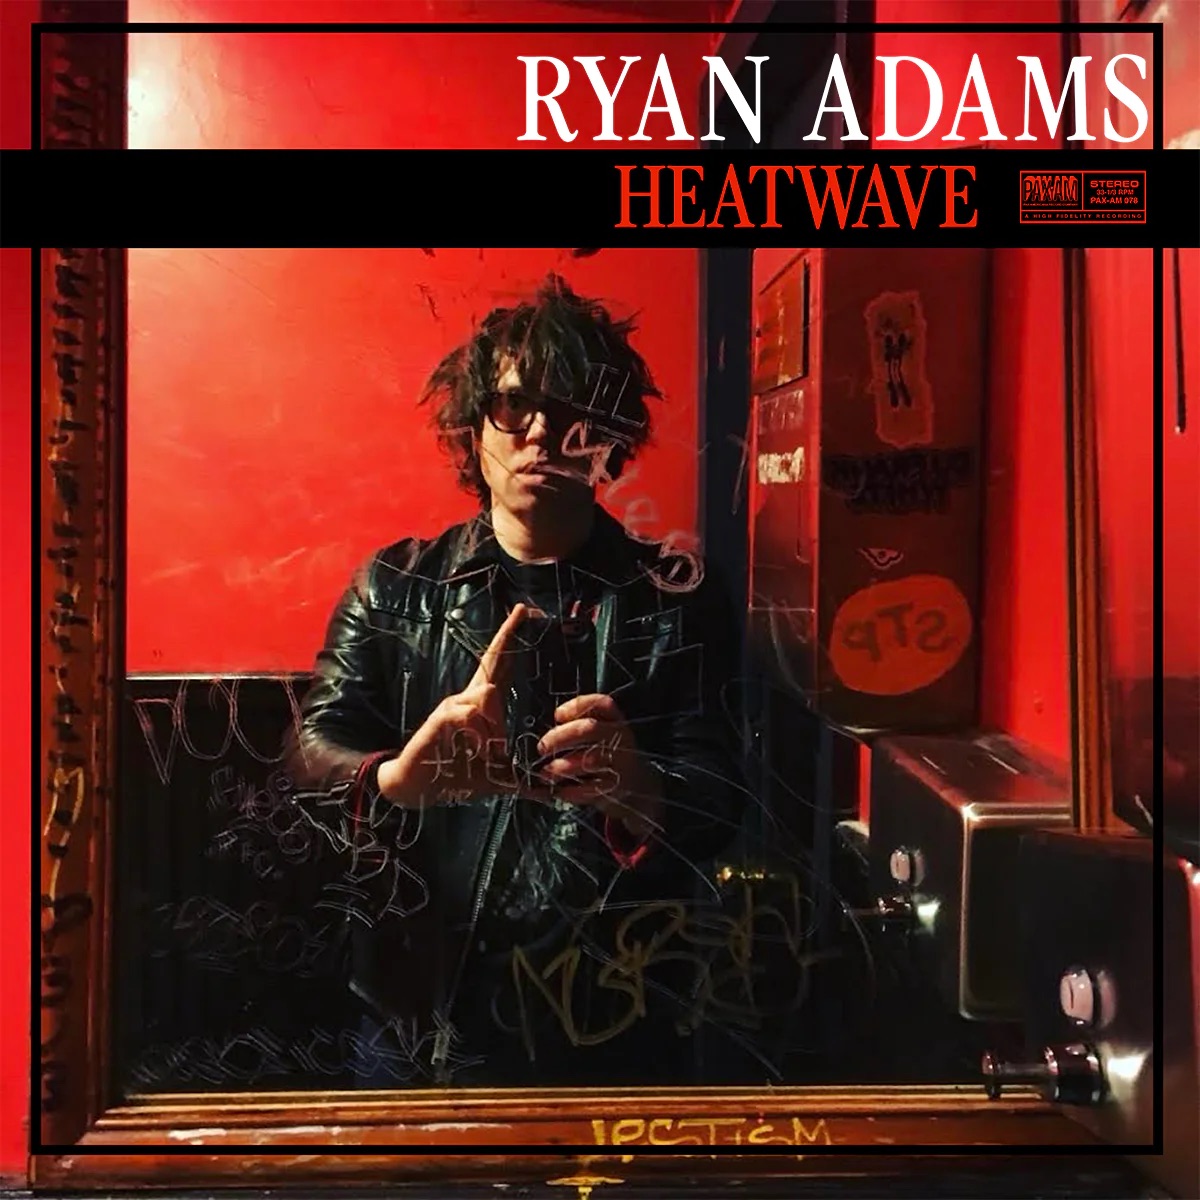 ALBUM REVIEW: Heatwave by Ryan Adams